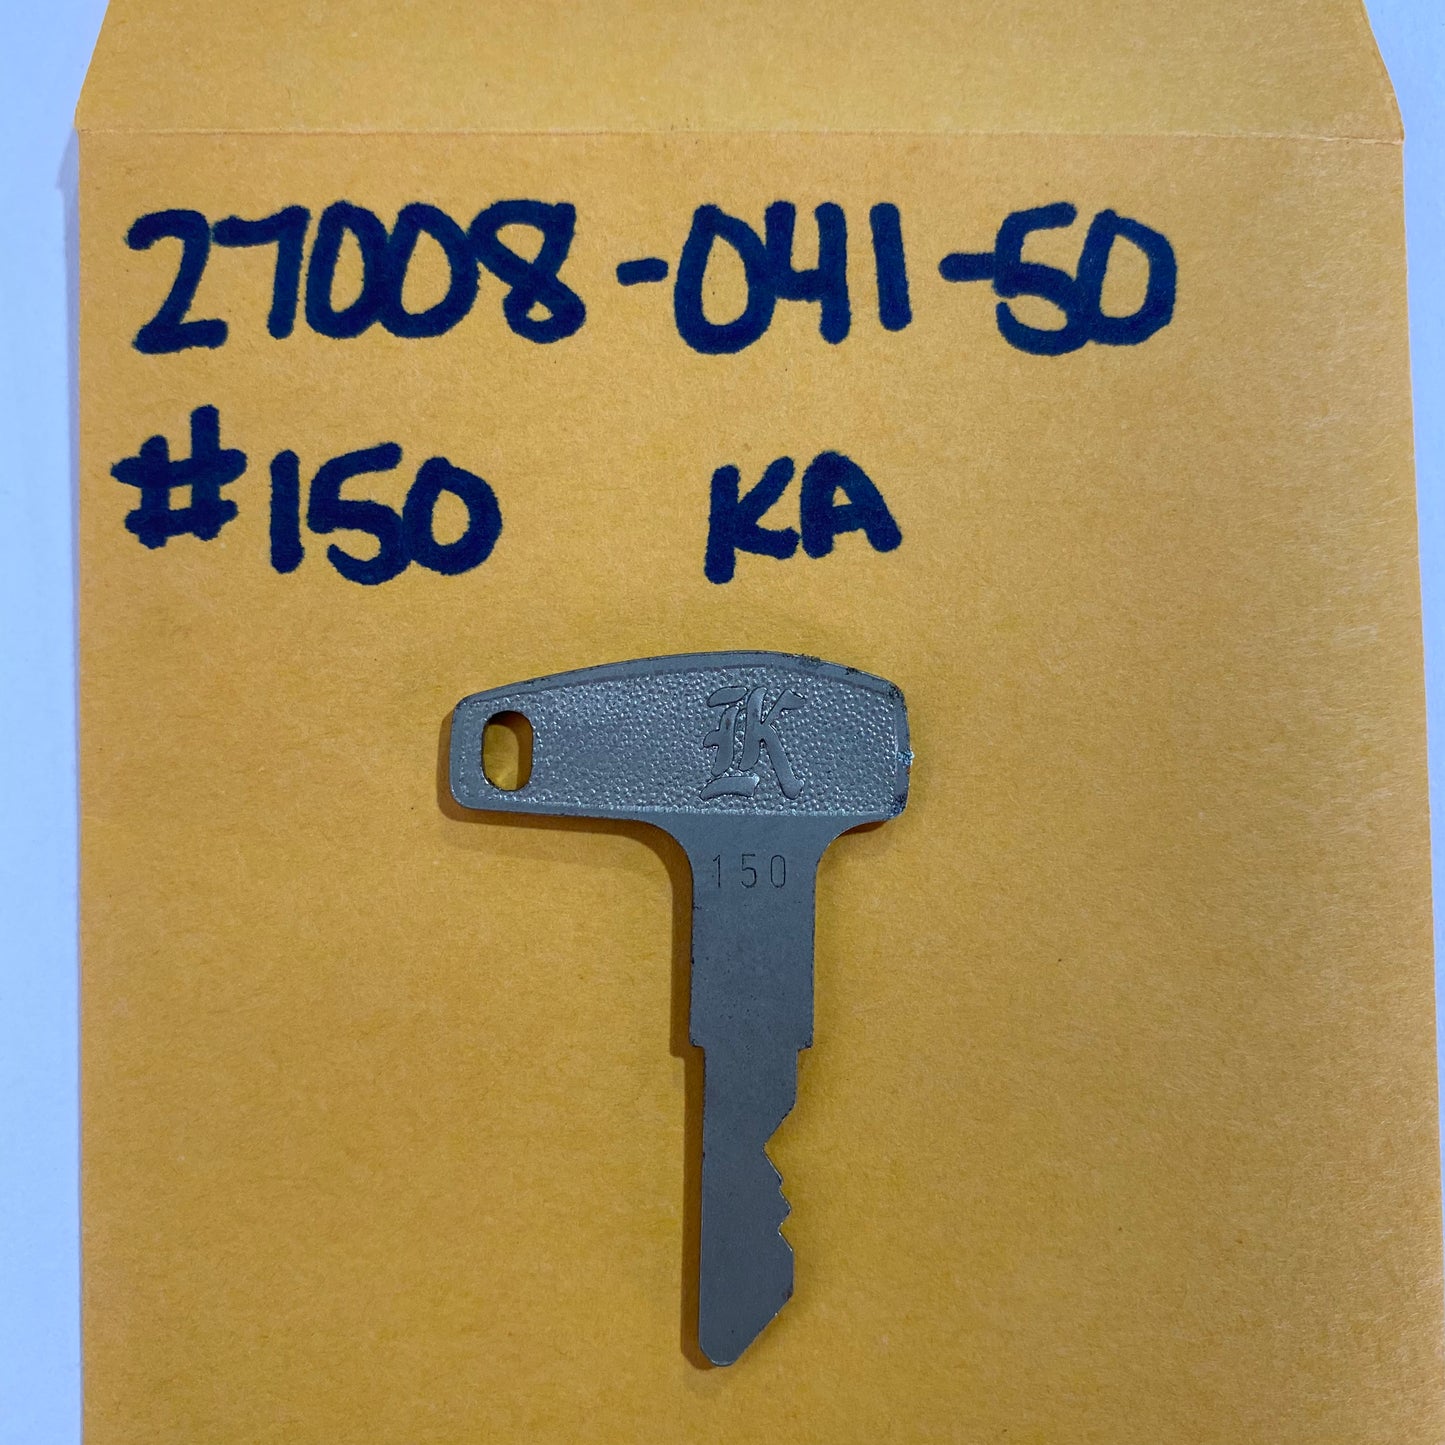 Kawasaki Key Set #150 27008-041-50